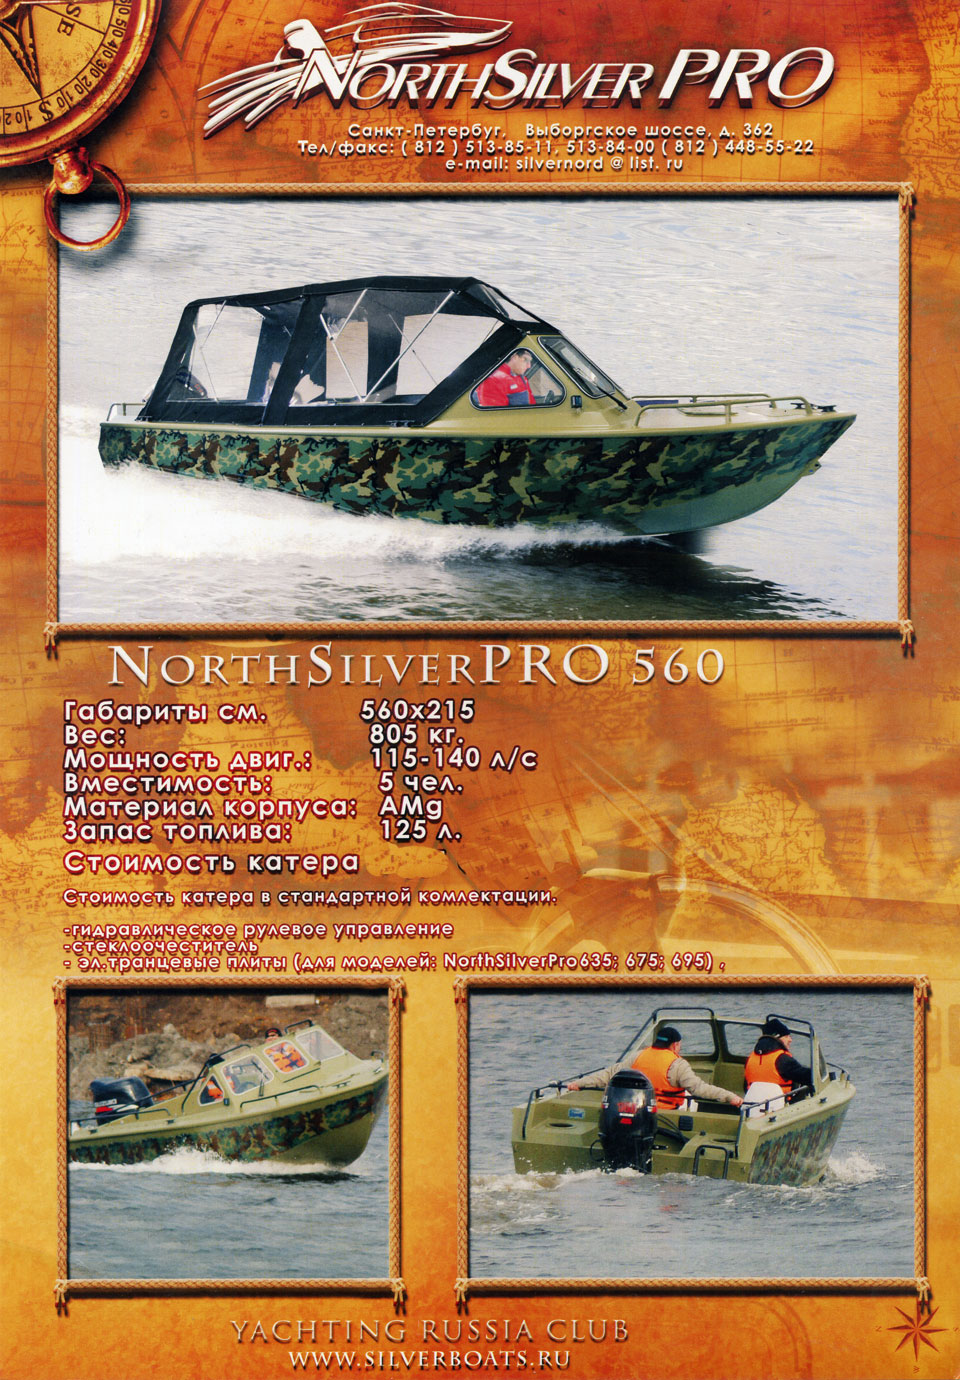  NorthSilver Pro 560